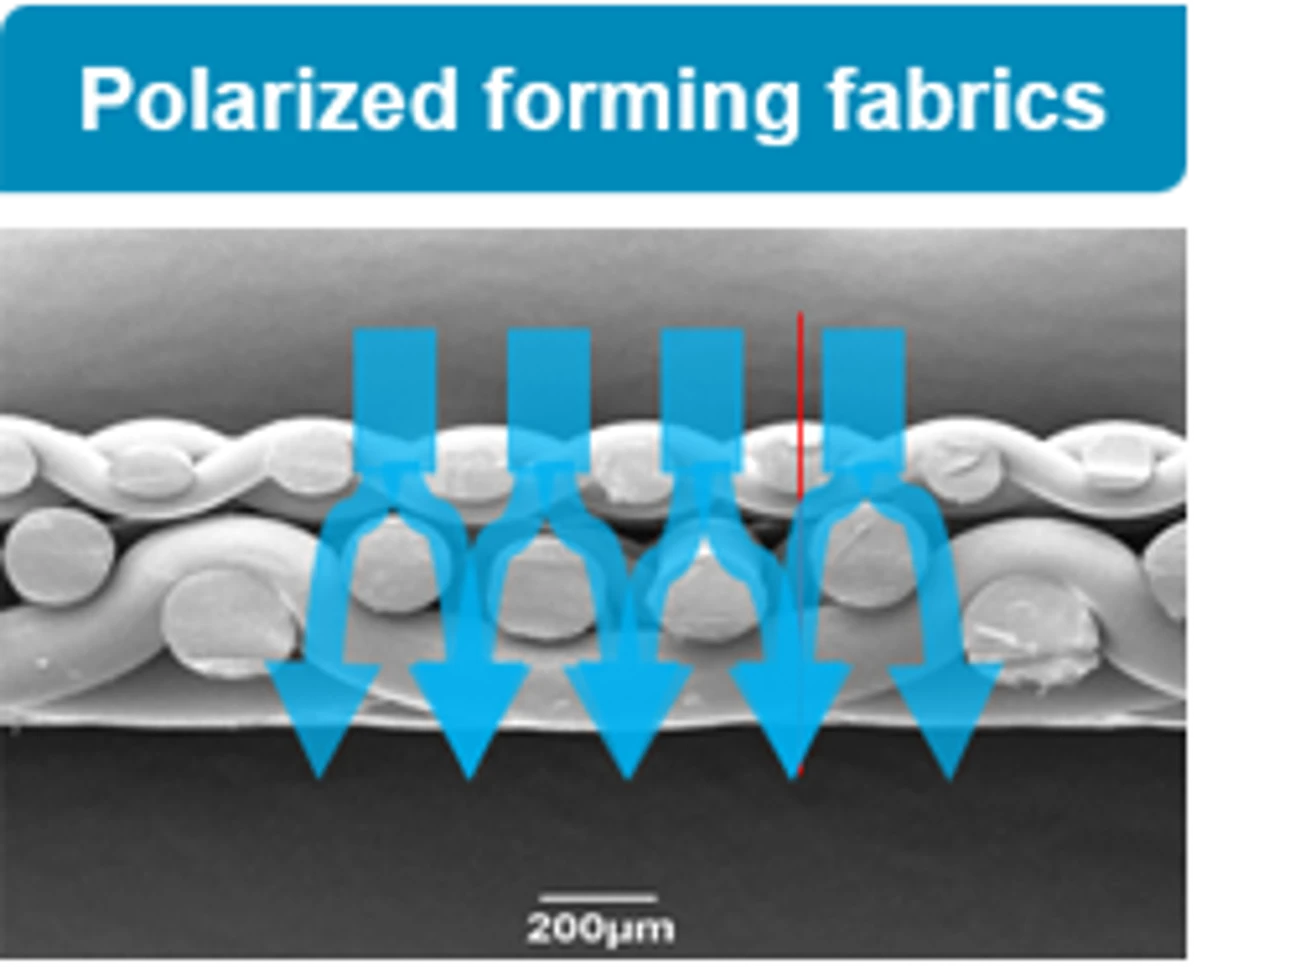 Polarized forming fabrics